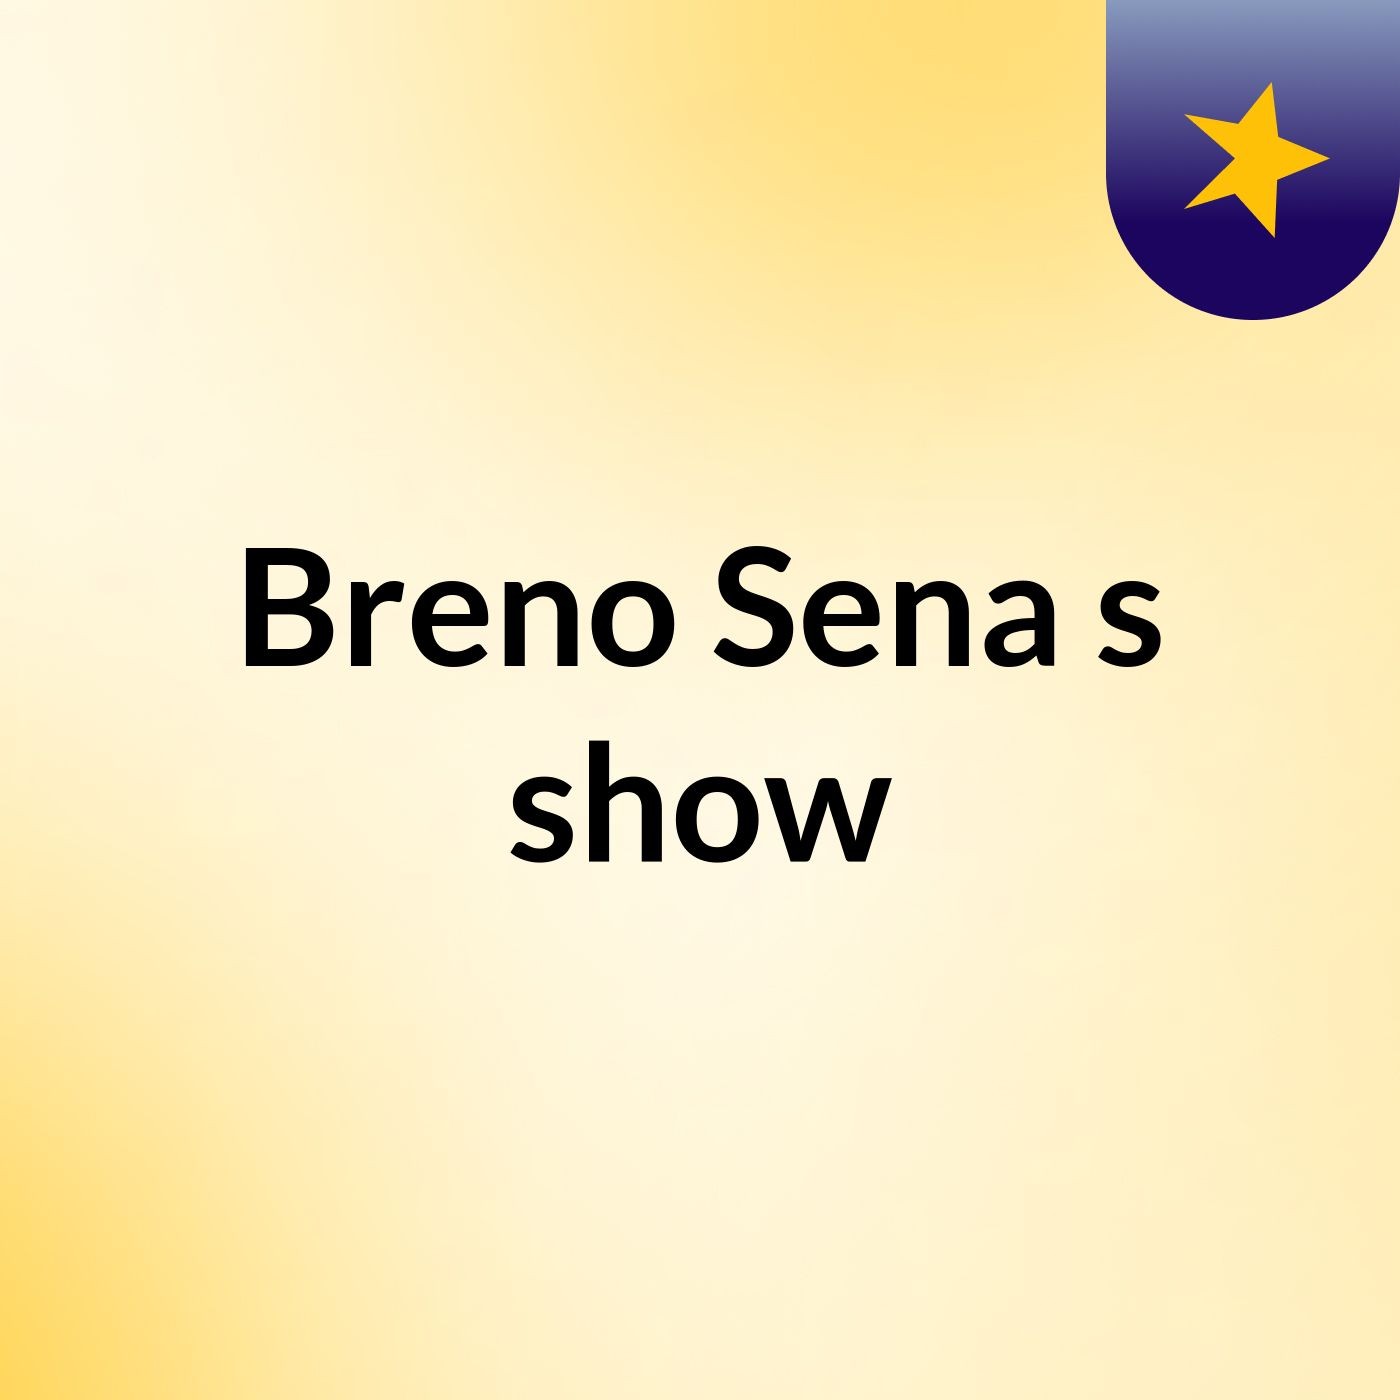 Breno Sena's show